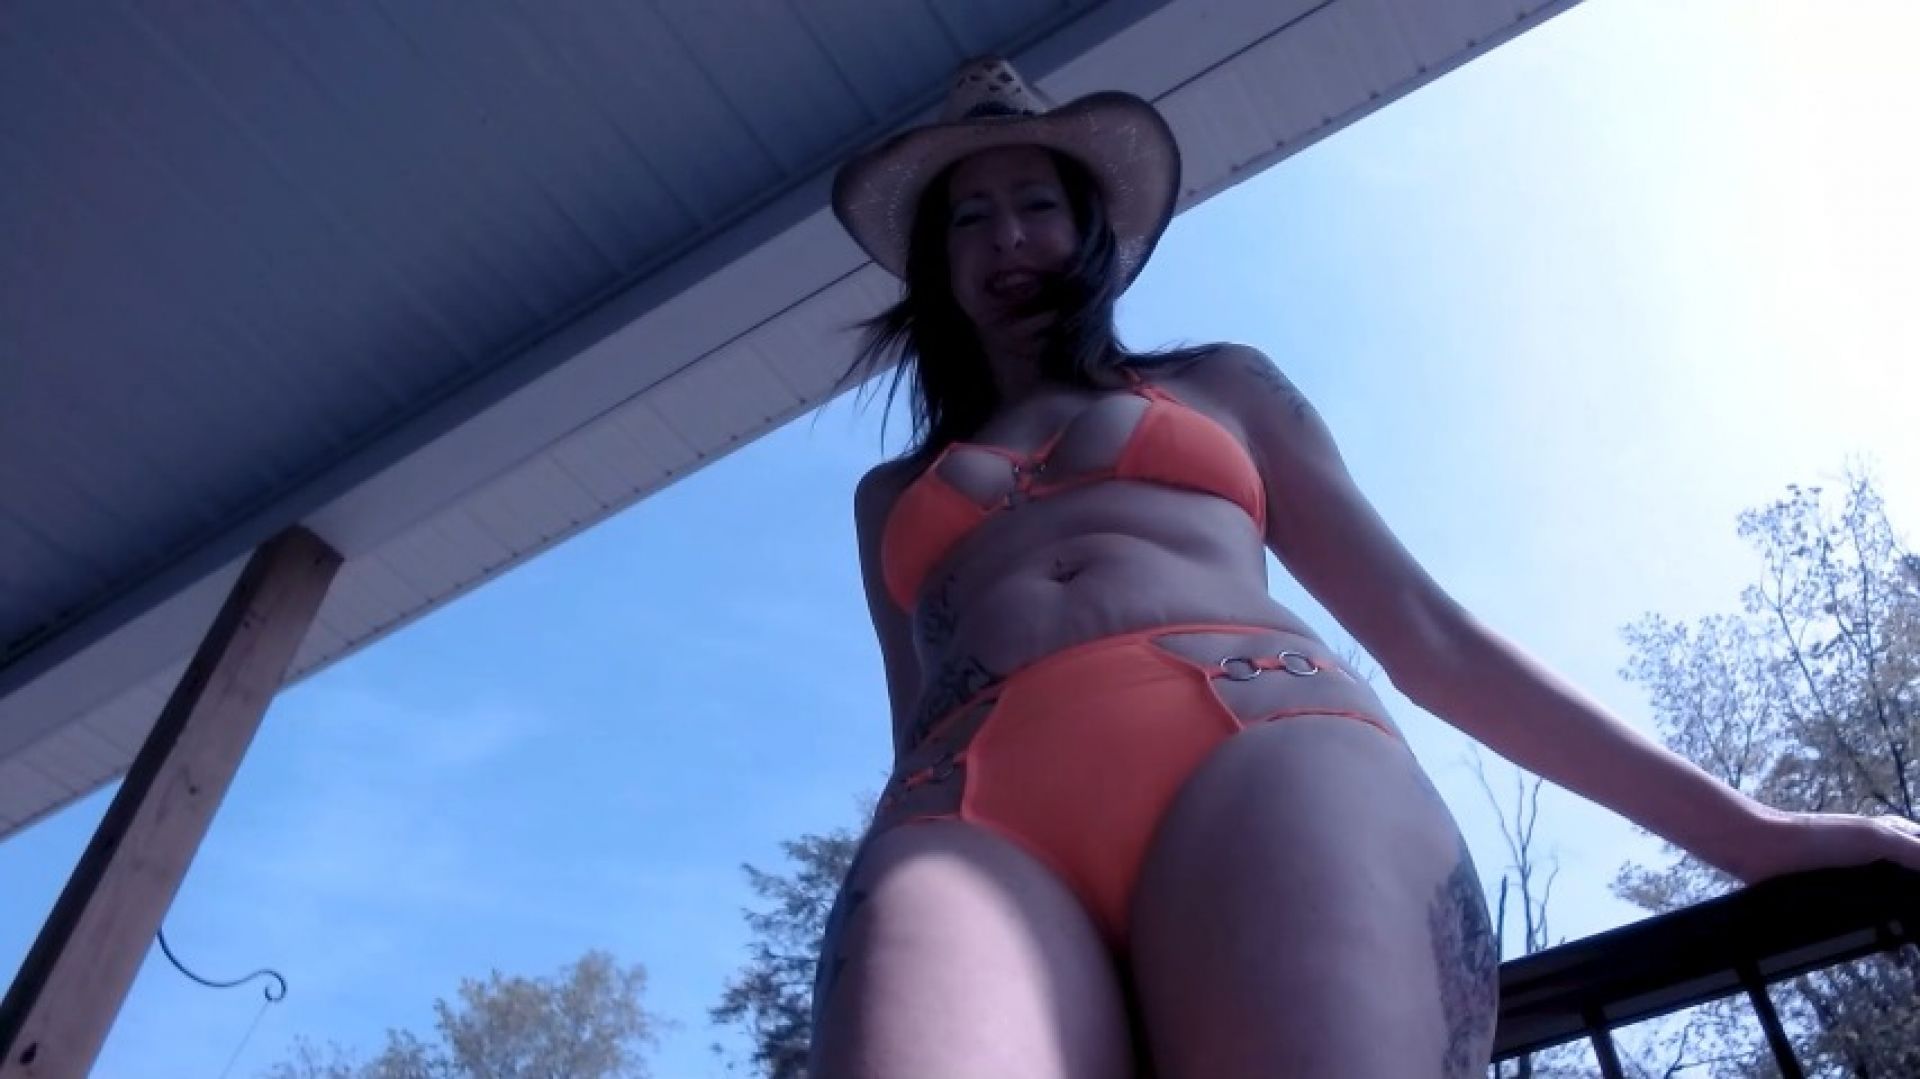 leaked Bikini on deck thumbnail